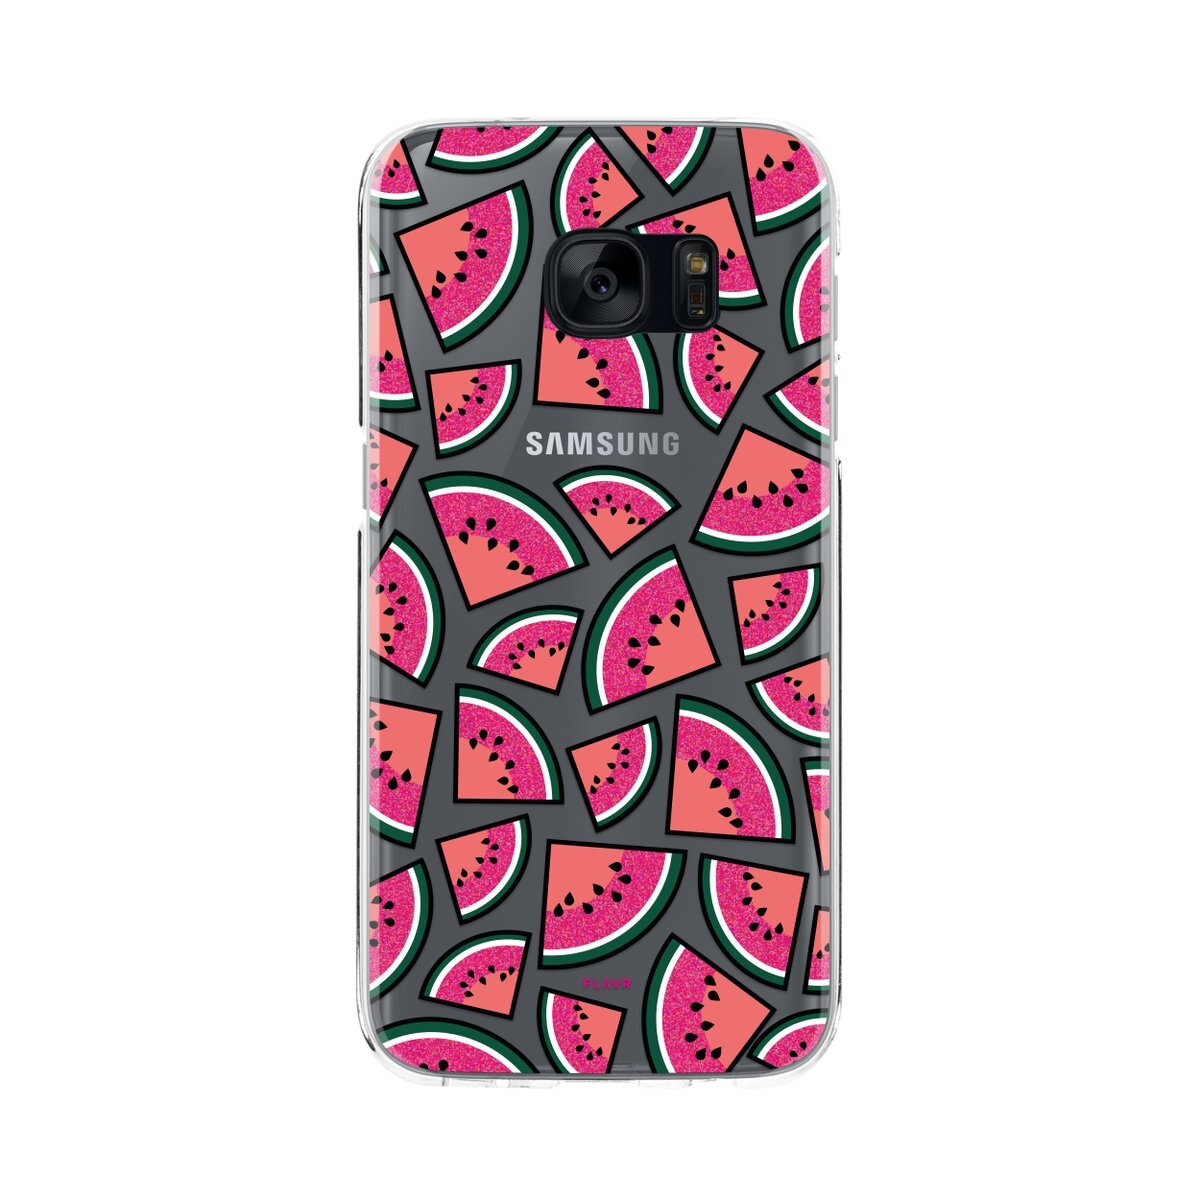 FLAVR iPlate Watermelon Samsung Galaxy S7 Back Cover